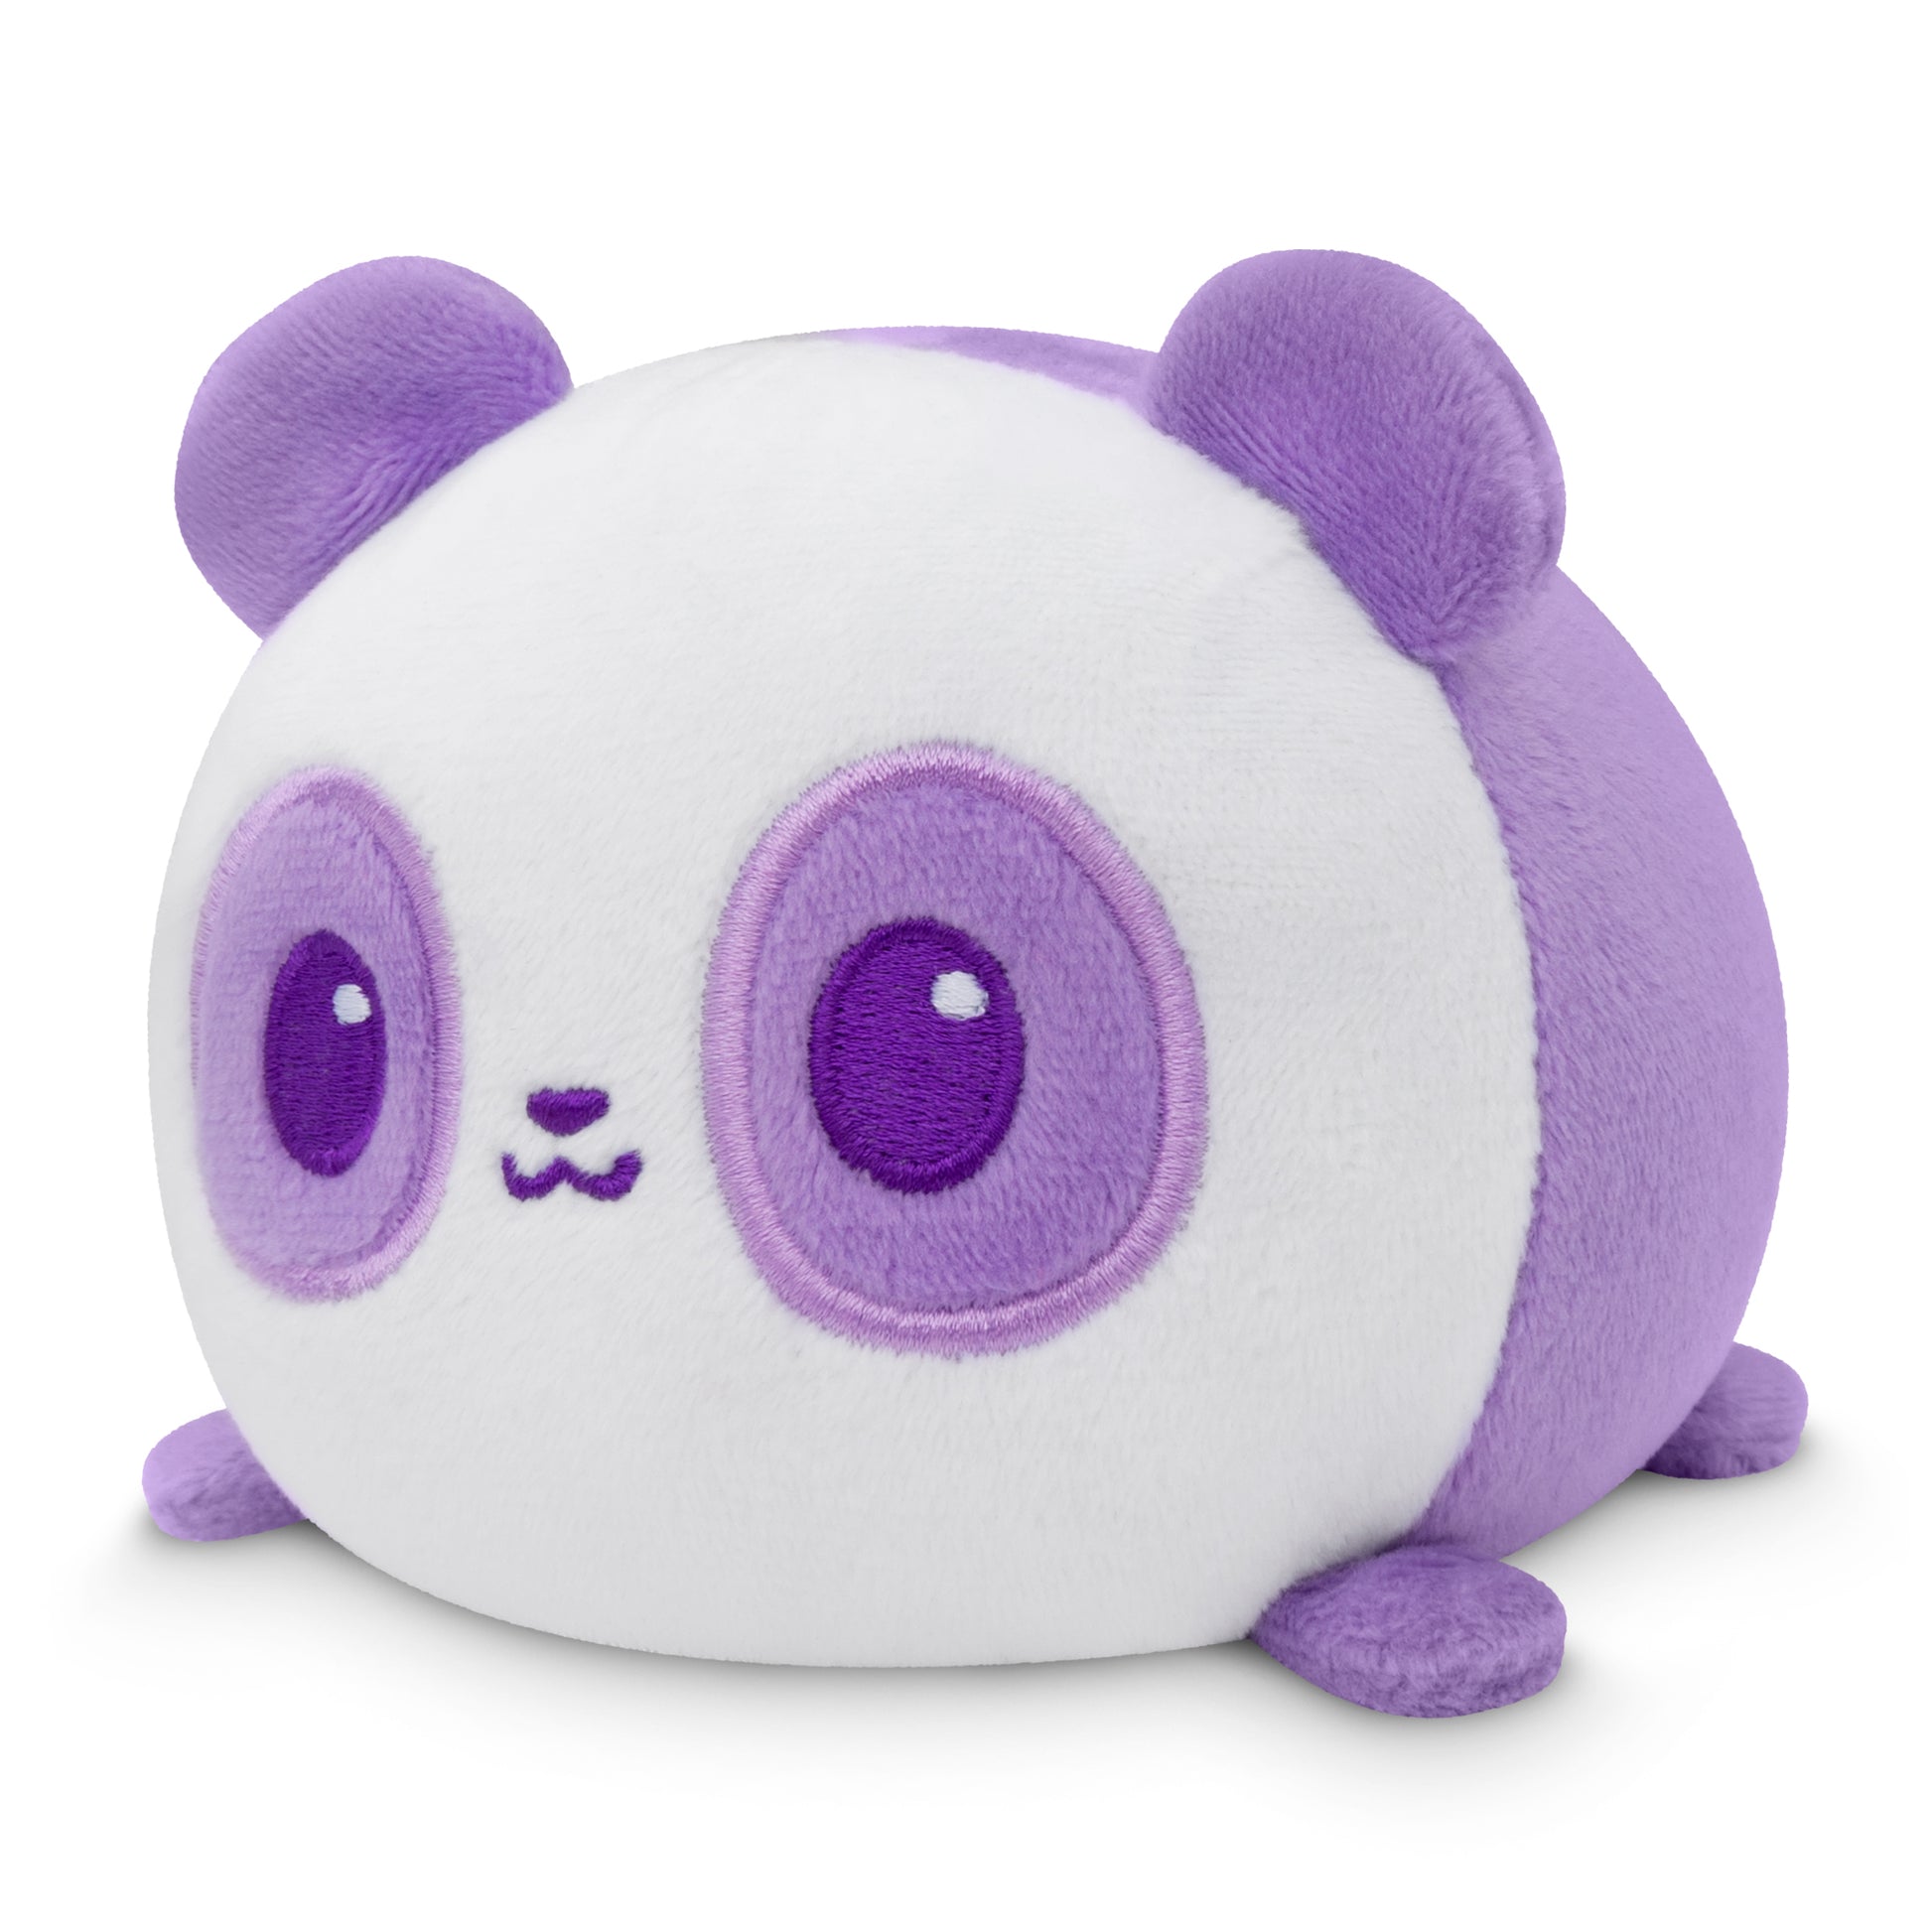 Plushiverse Bobalicious Panda Plushie Tote Bag of a round, white and purple cartoonish panda with large eyes by TeeTurtle.